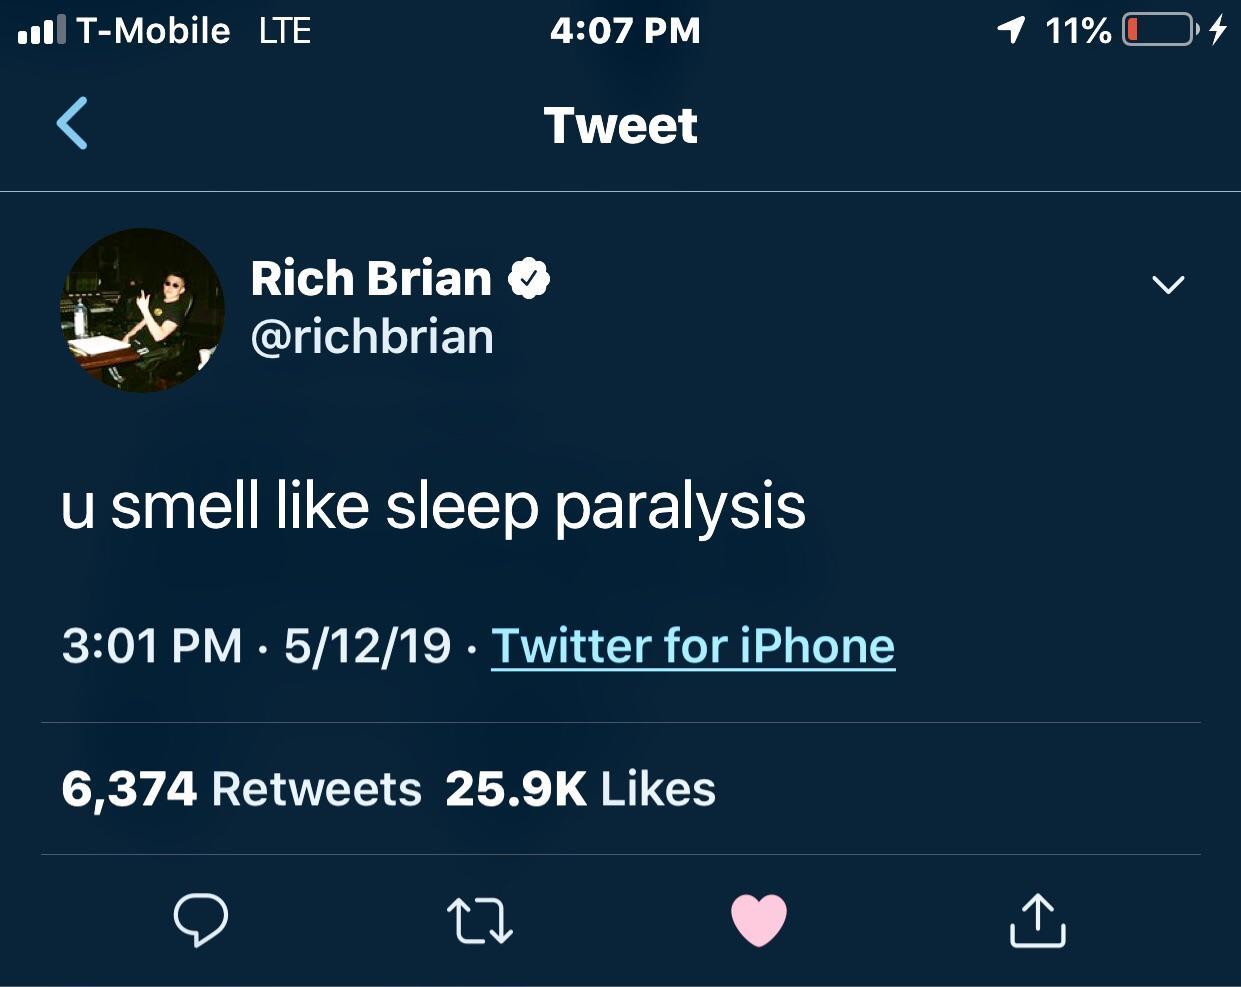 screenshot - ..1 TMobile Lte 1 11% O4 Tweet Rich Brian u smell sleep paralysis 51219 Twitter for iPhone 6,374